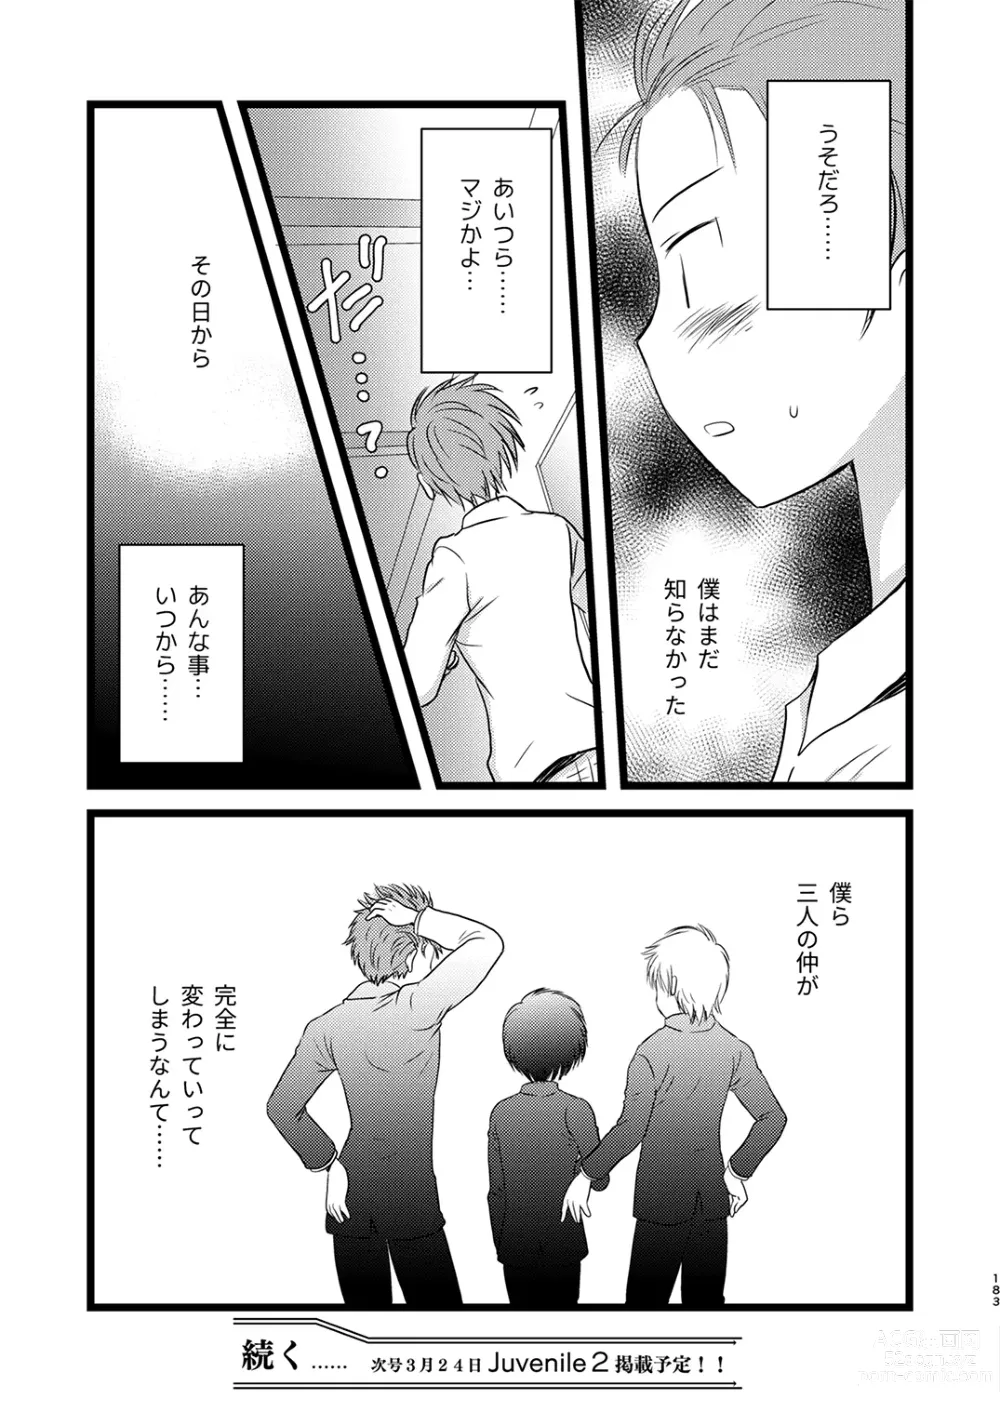 Page 182 of manga Juvenile 2023-12